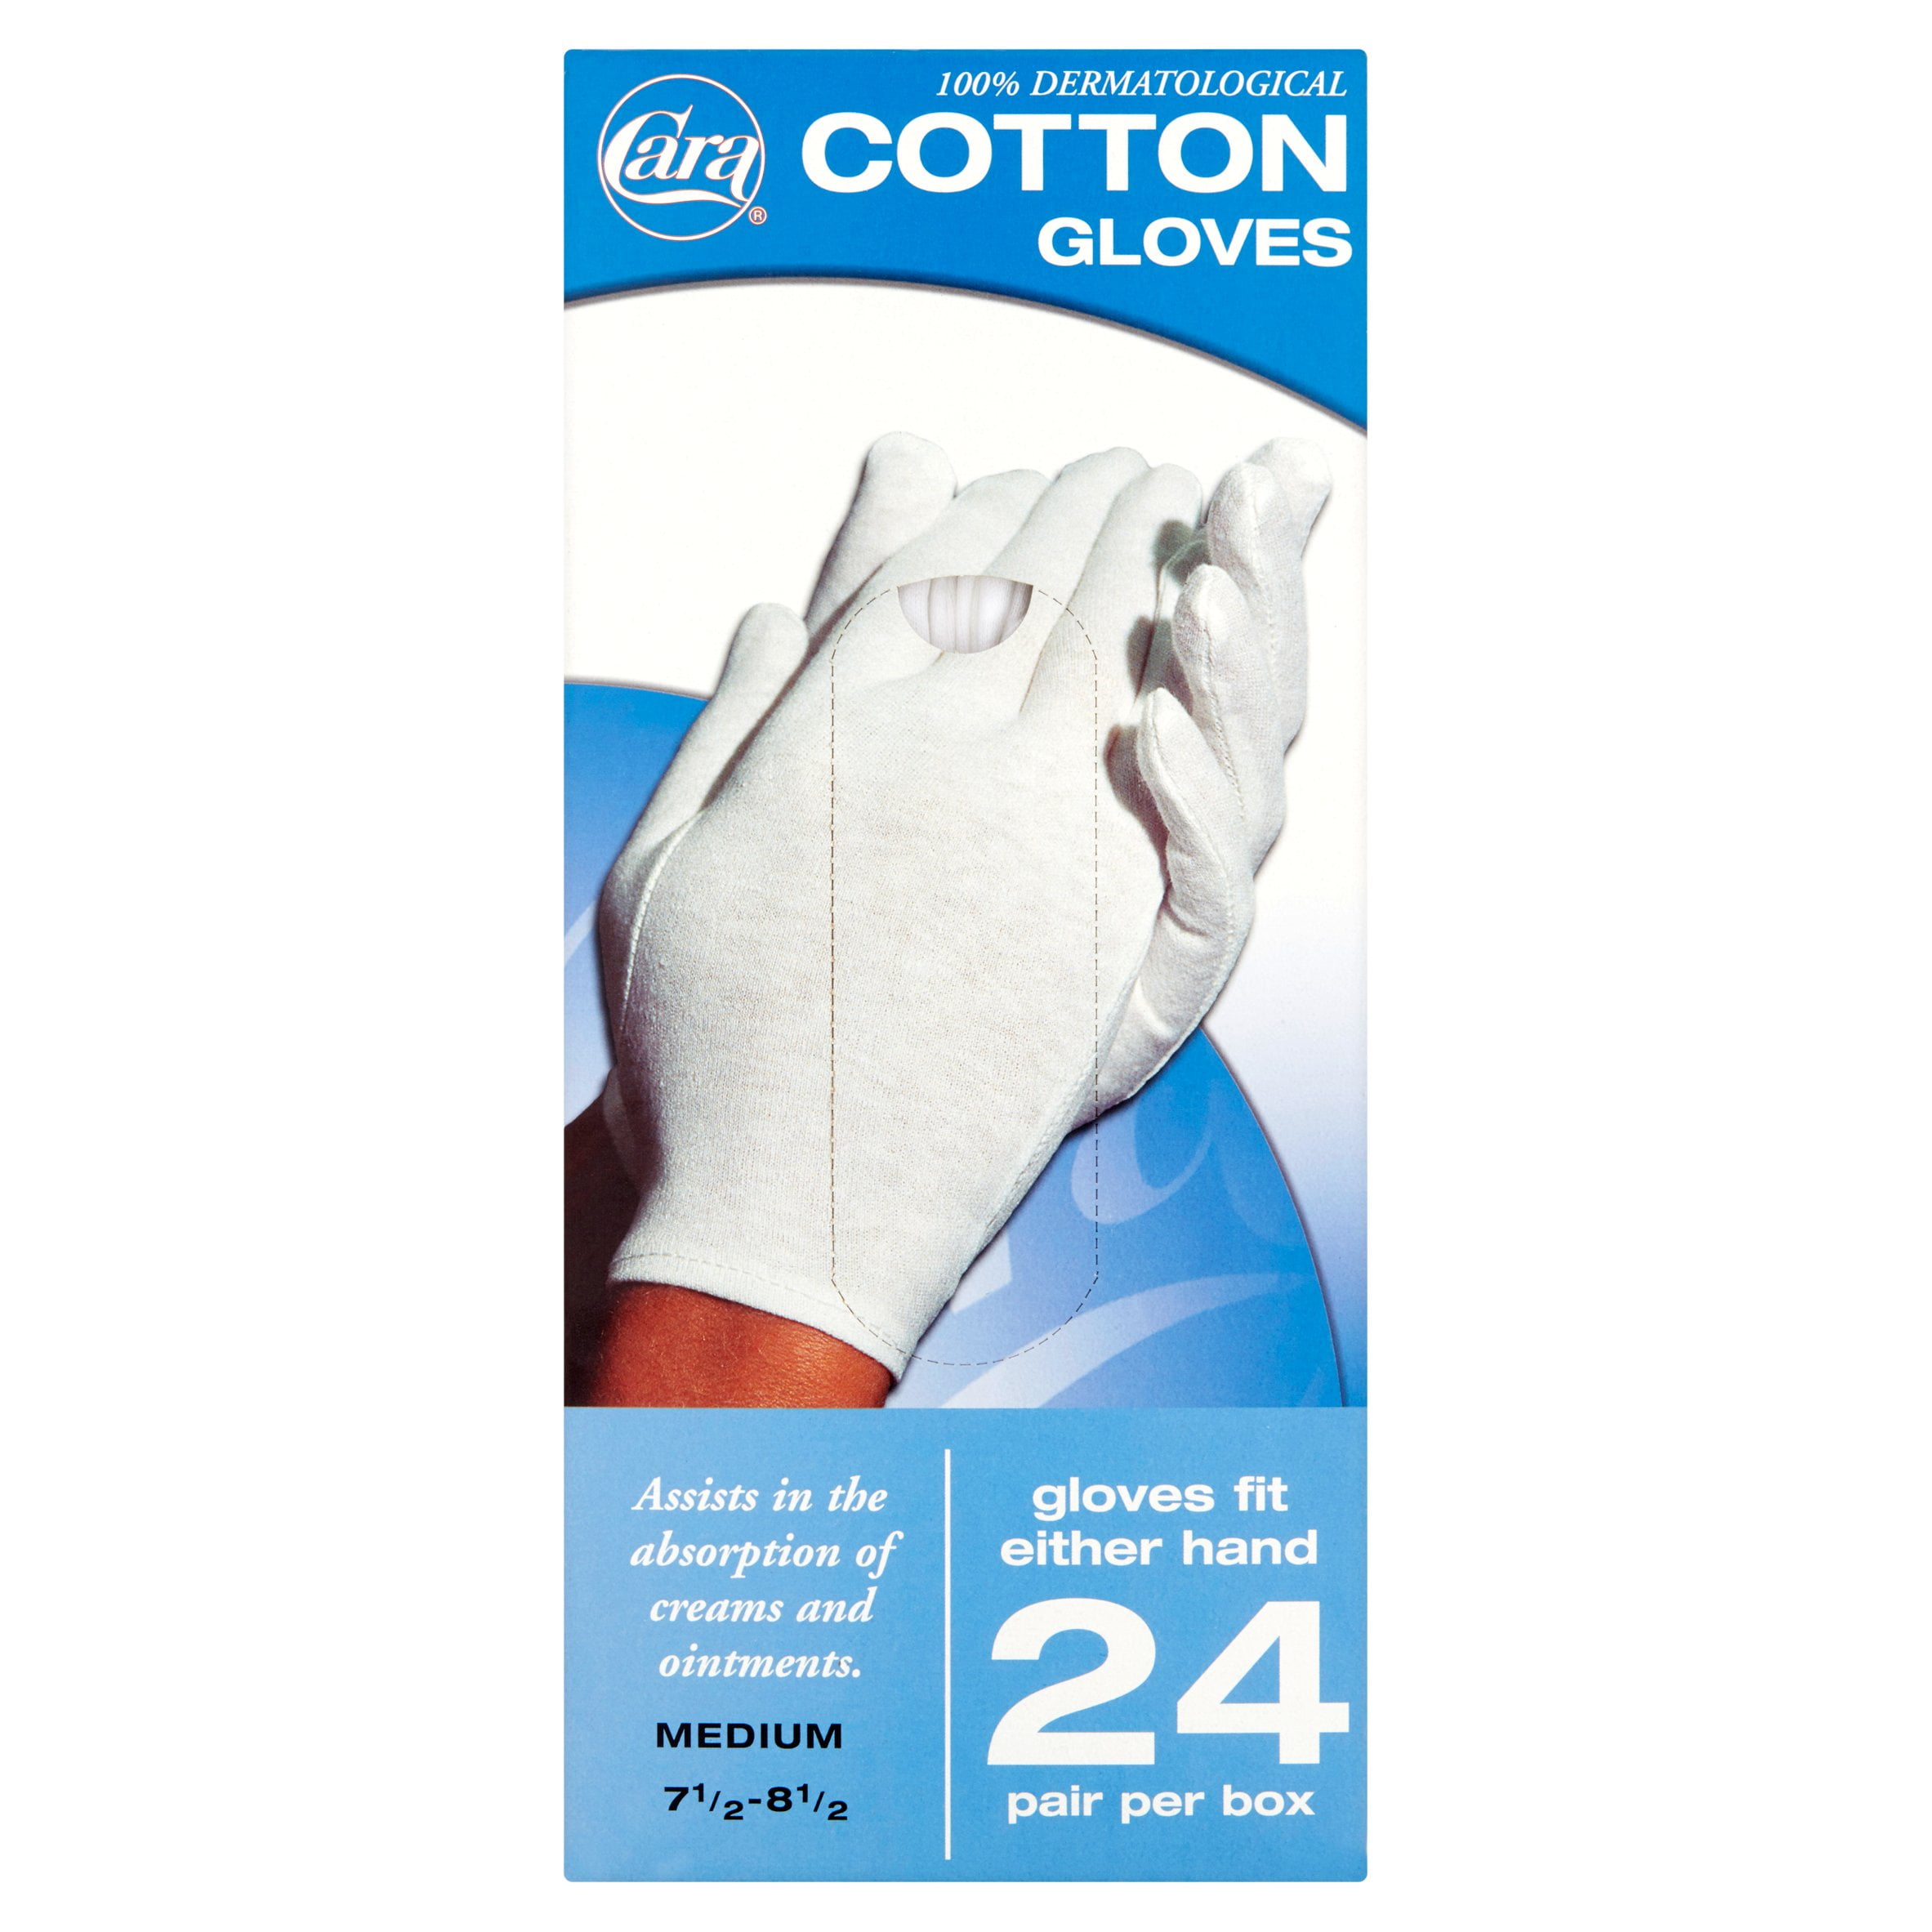 Cara Disposable Cotton Therapy Gloves, 24 Pair - Medium